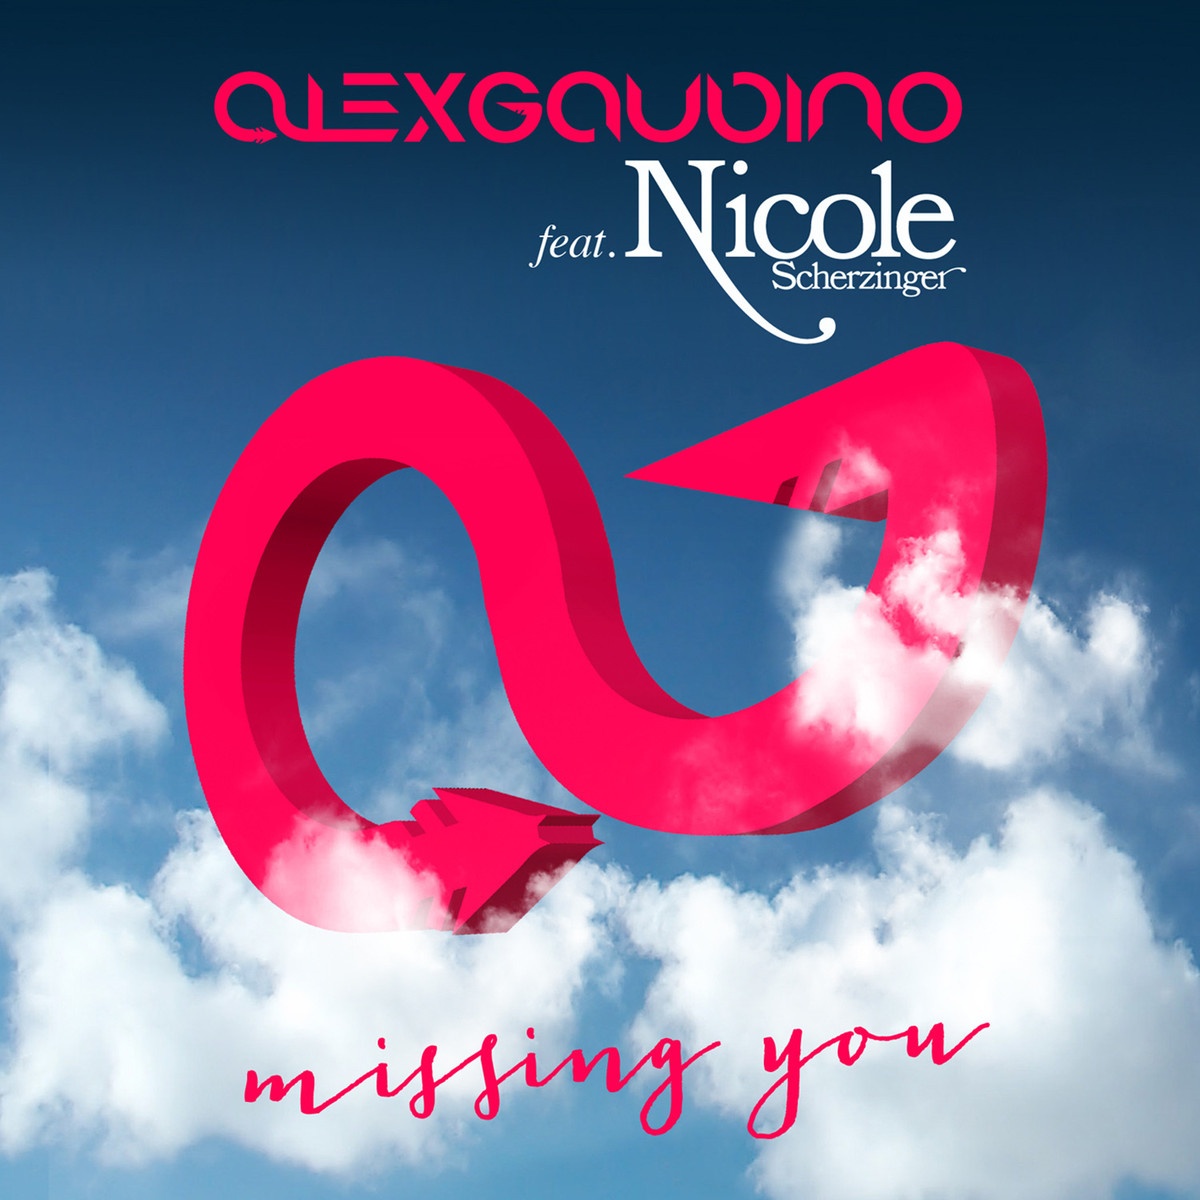 Missing You (Alex Guesta Remix)